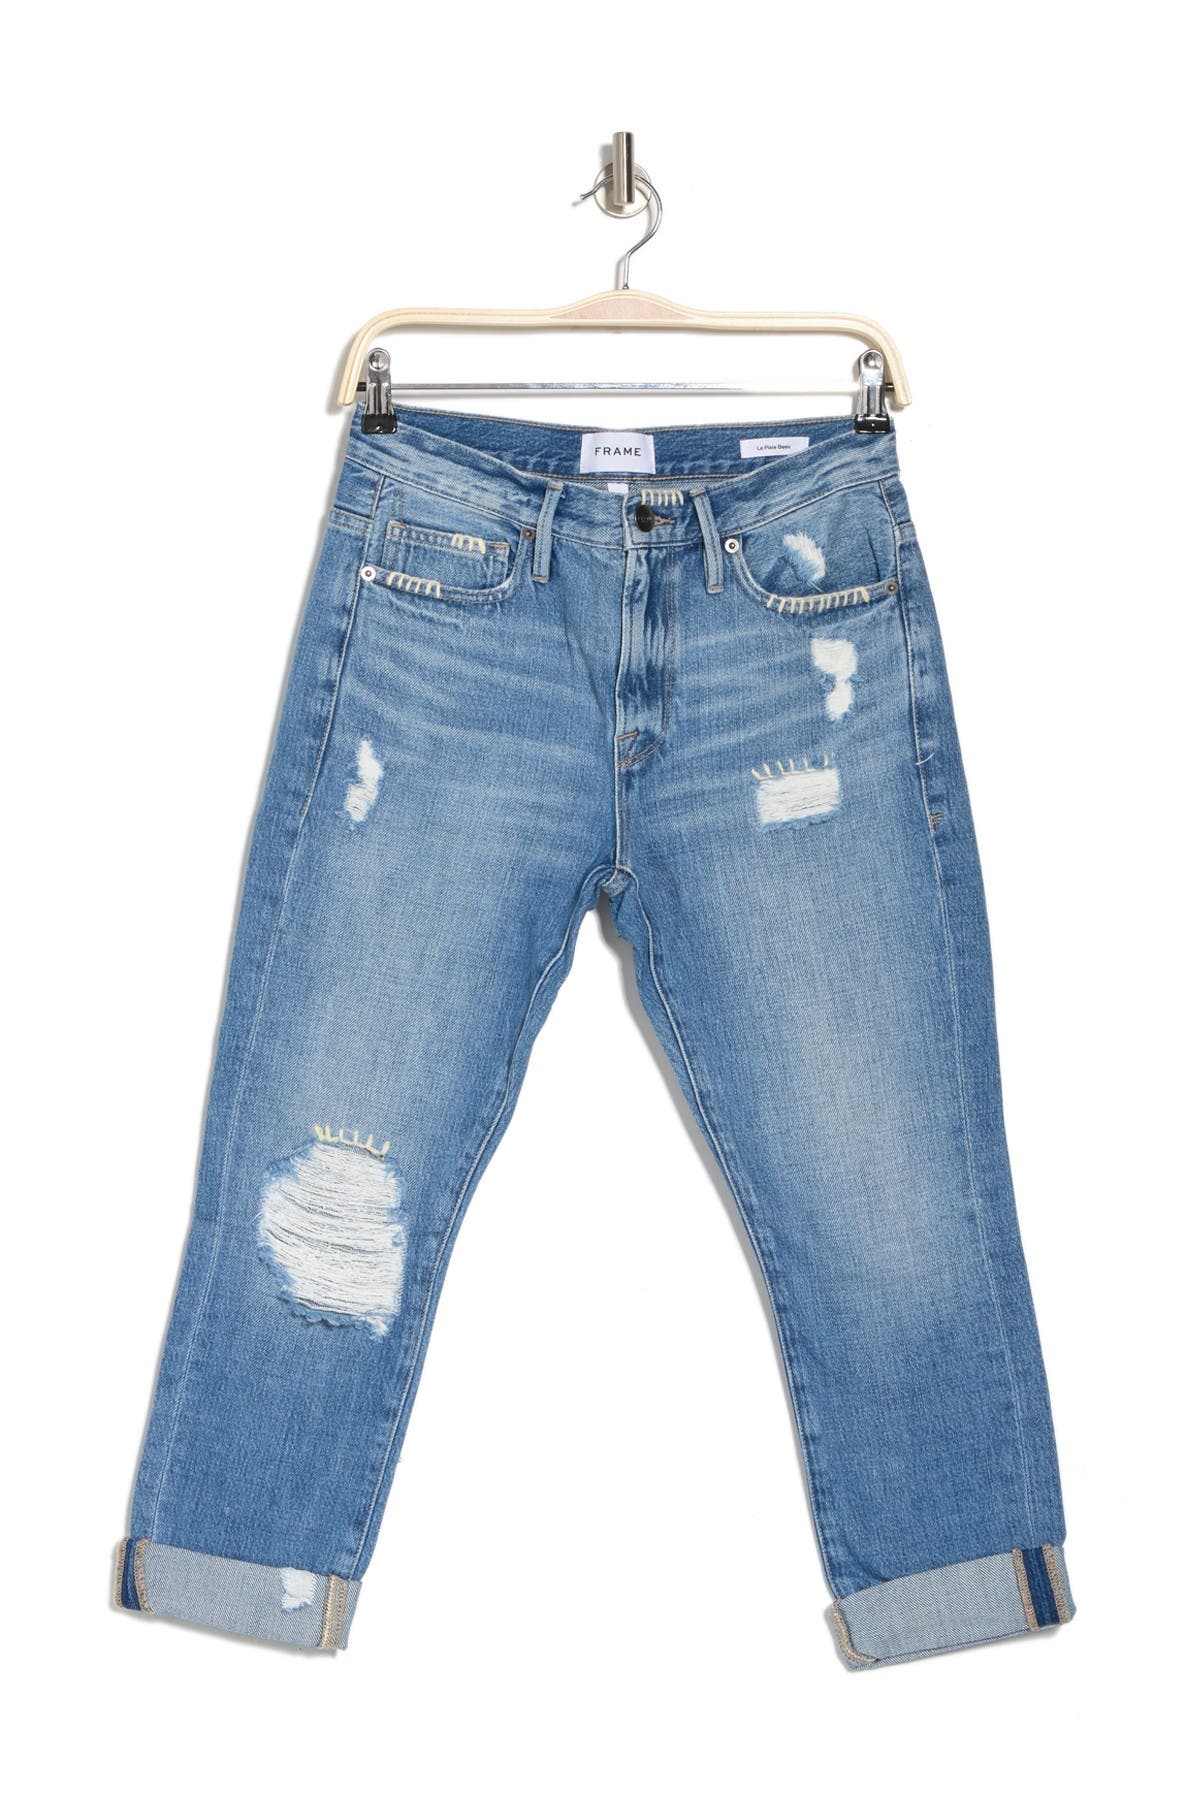 Frame Le Pixie Beau Distressed Crop Jeans In Medium Blue